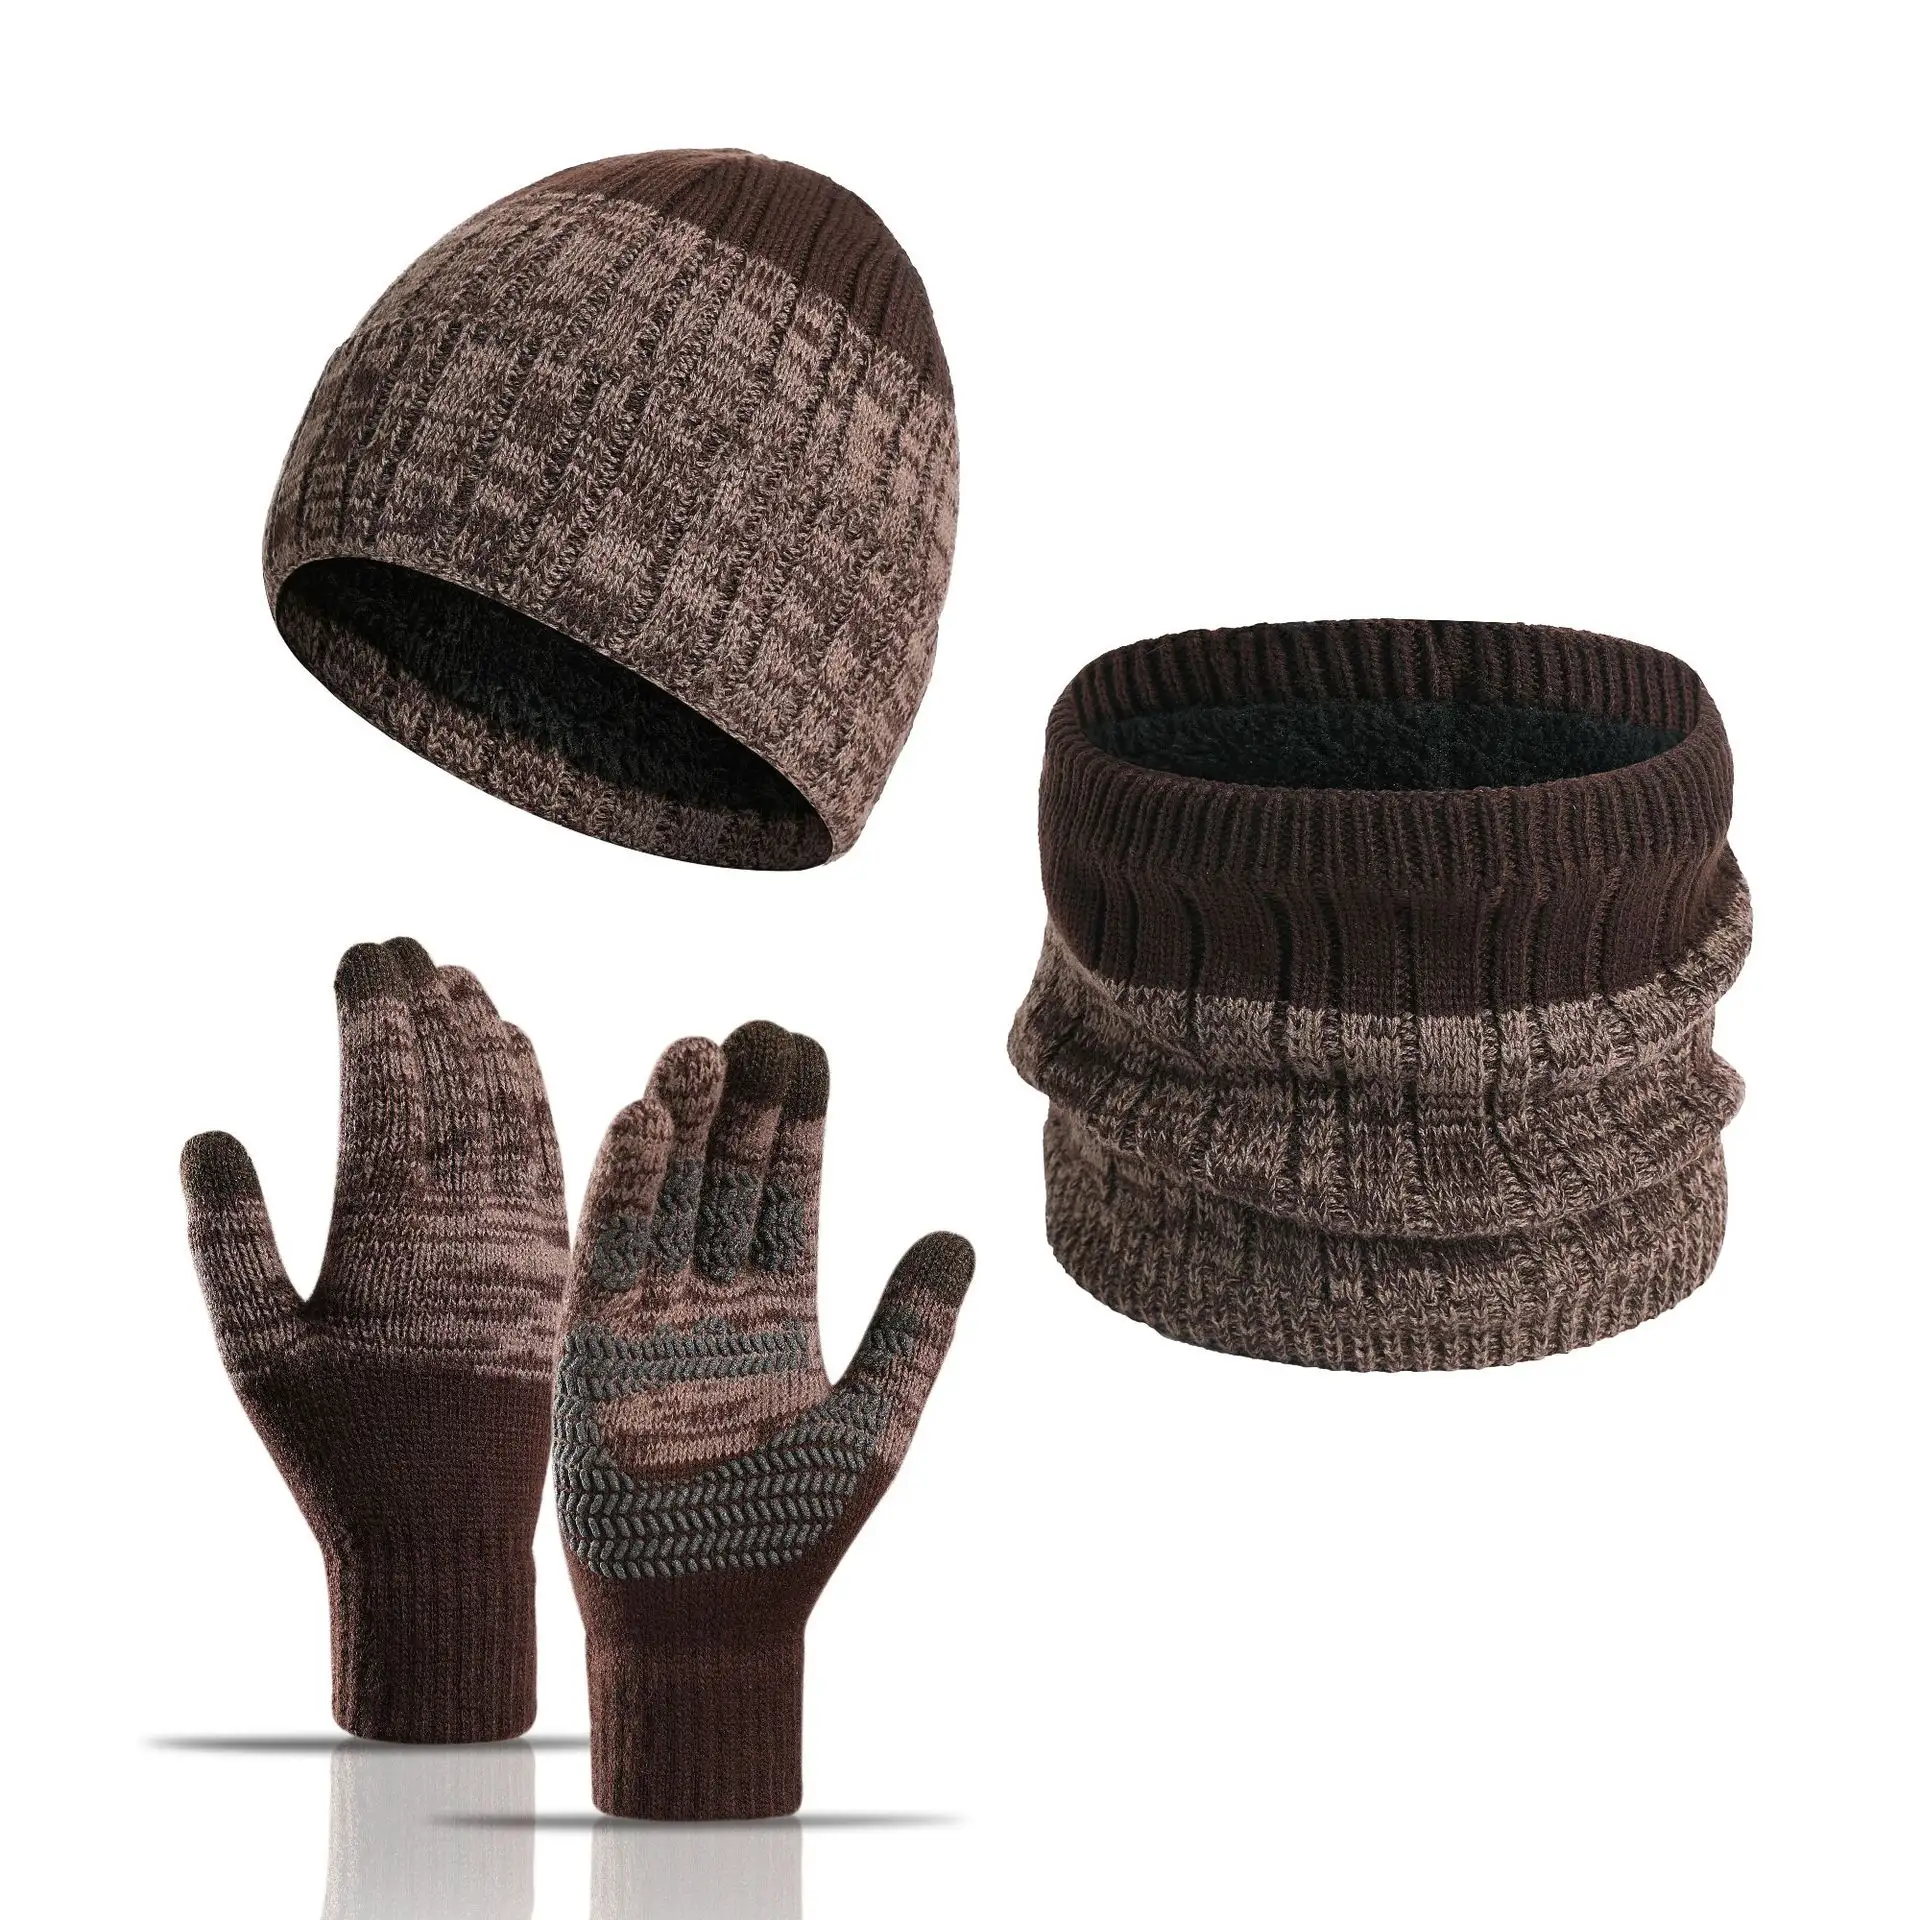 Conjunto de gorro y guante de invierno personalizado barato de Czelrine Soft Touch 100% Acrylic Beanie Knitted Hat Bufanda Set